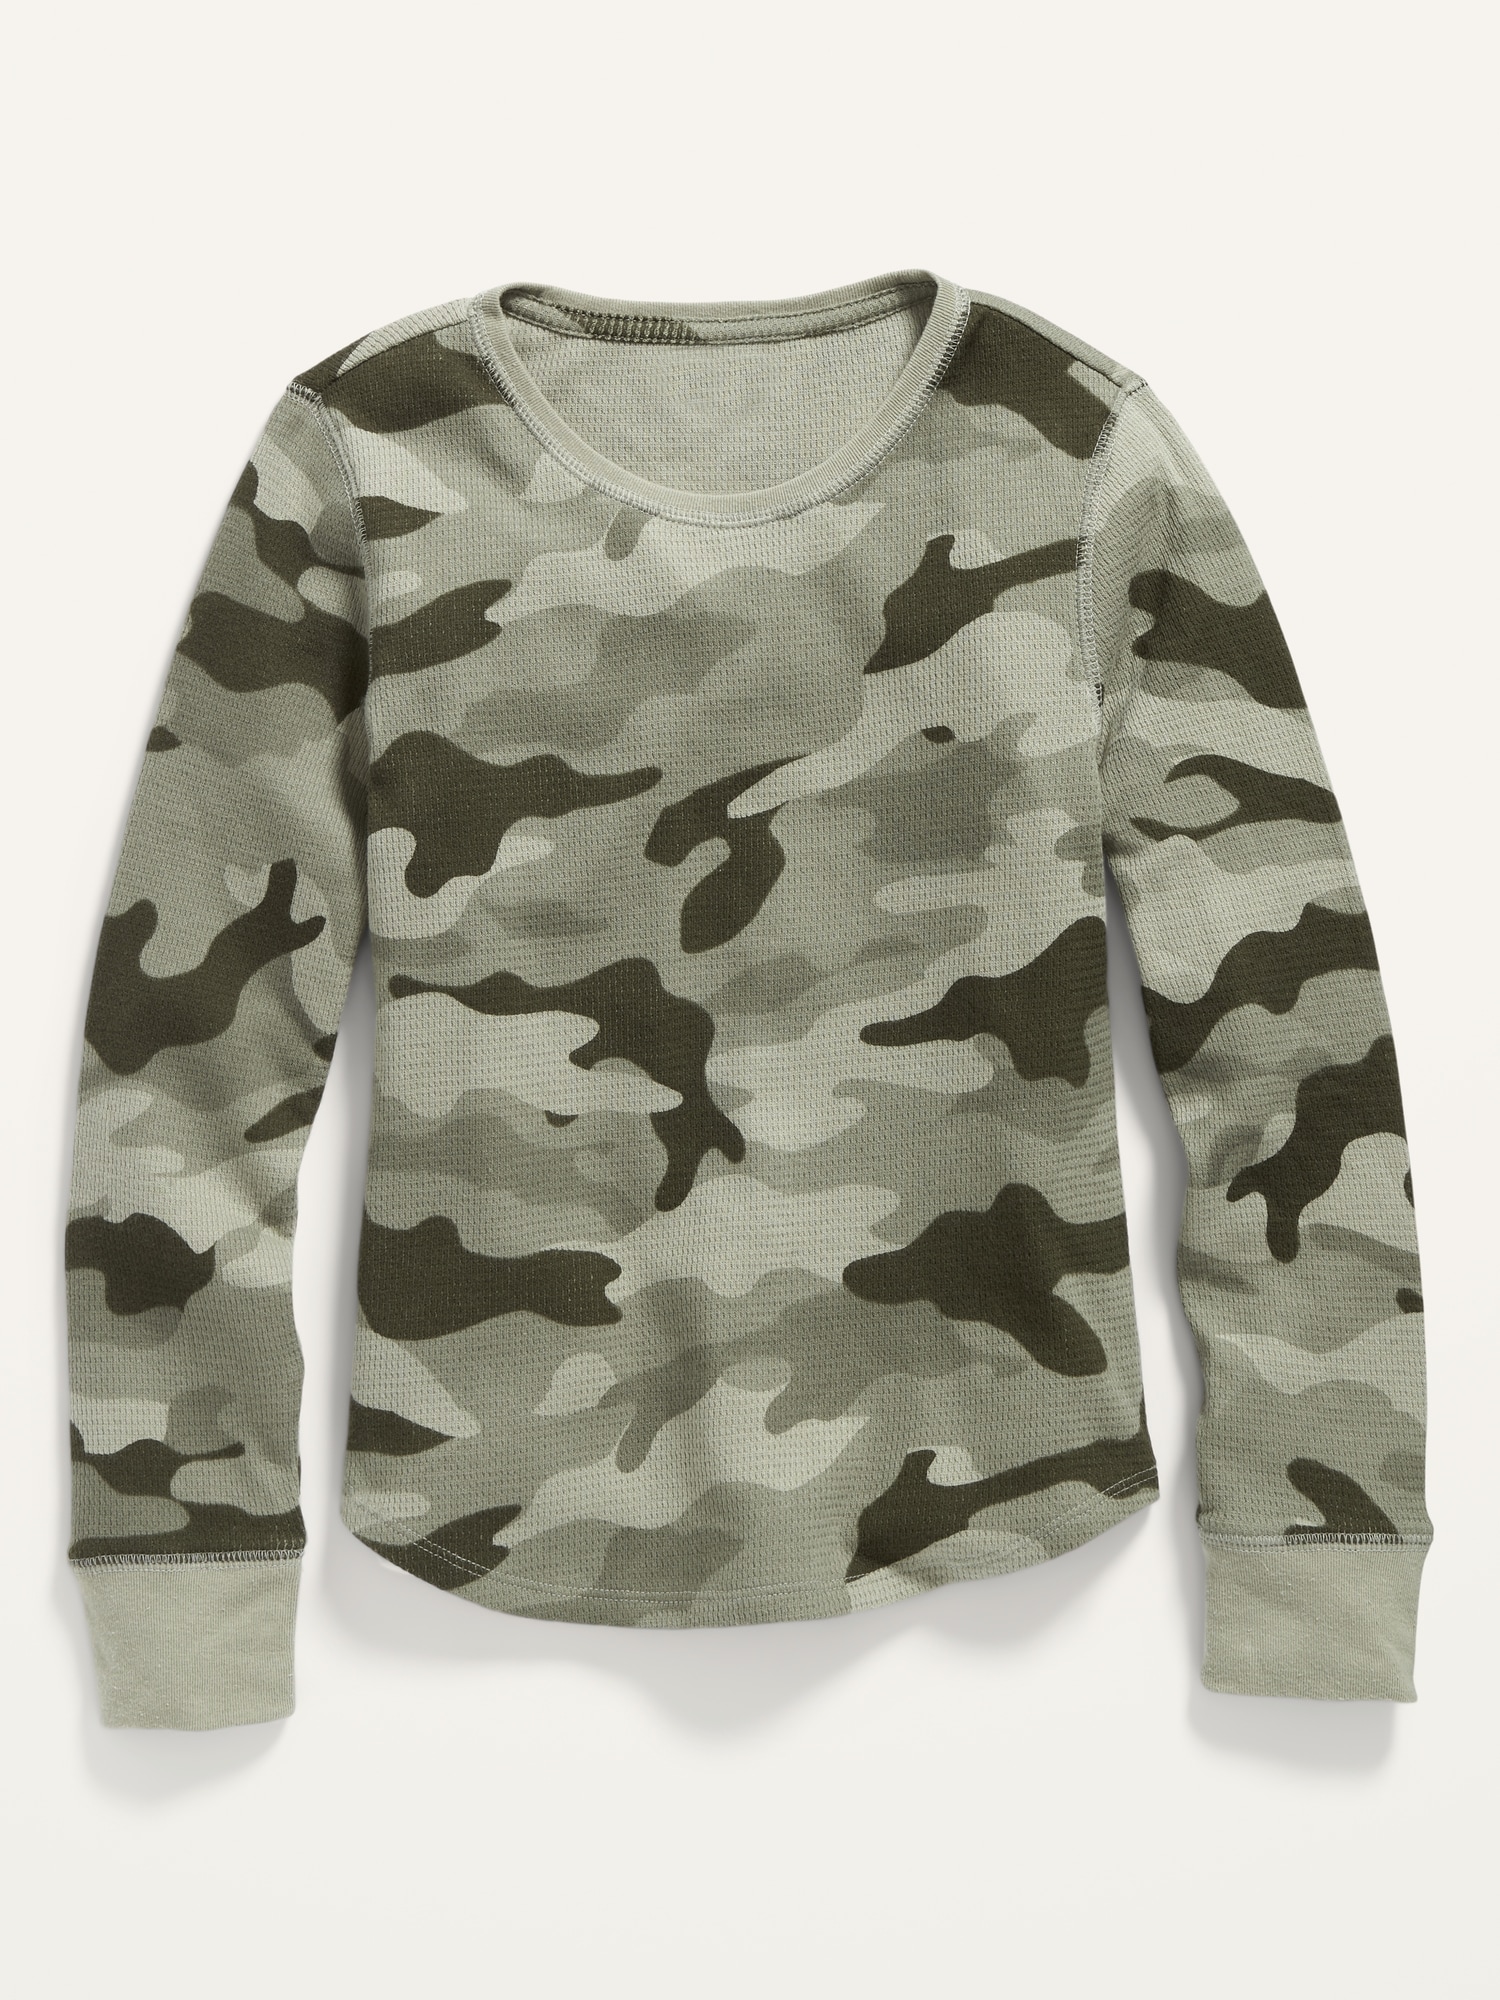 Military Thermal Shirt - Navy